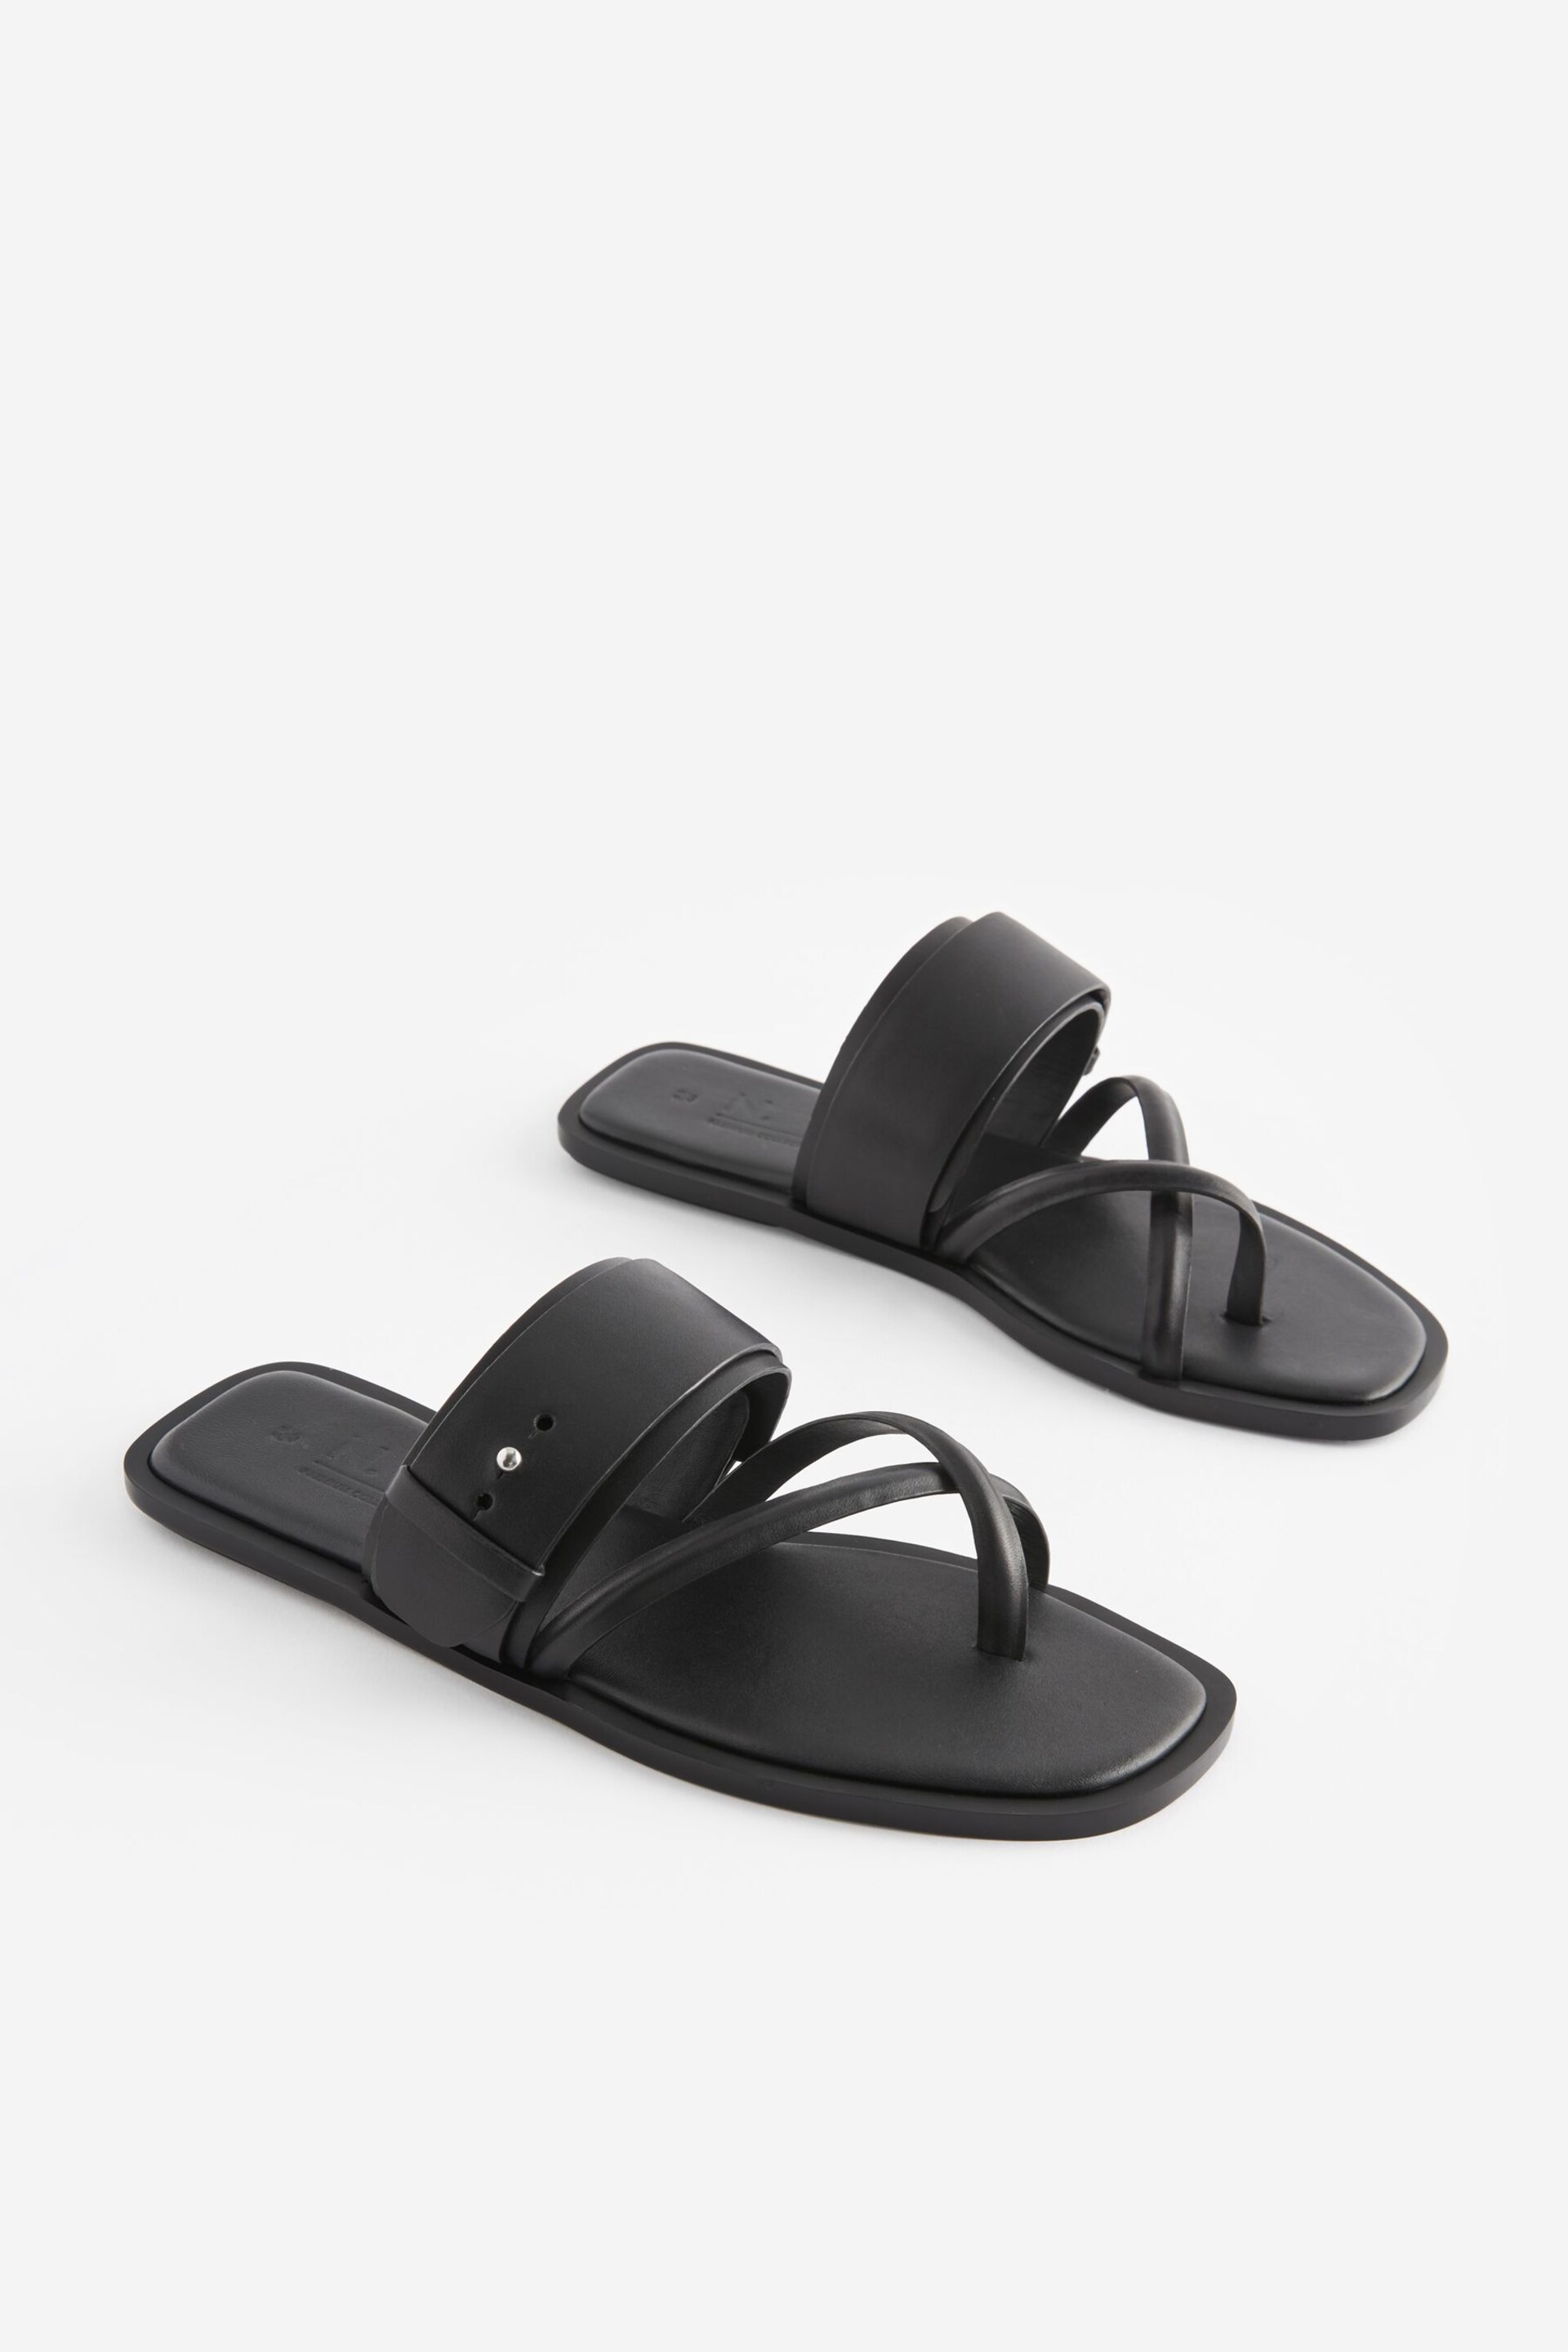 Black Premium Leather Forever Comfort® Cross Toe Post Sandals - Image 2 of 9